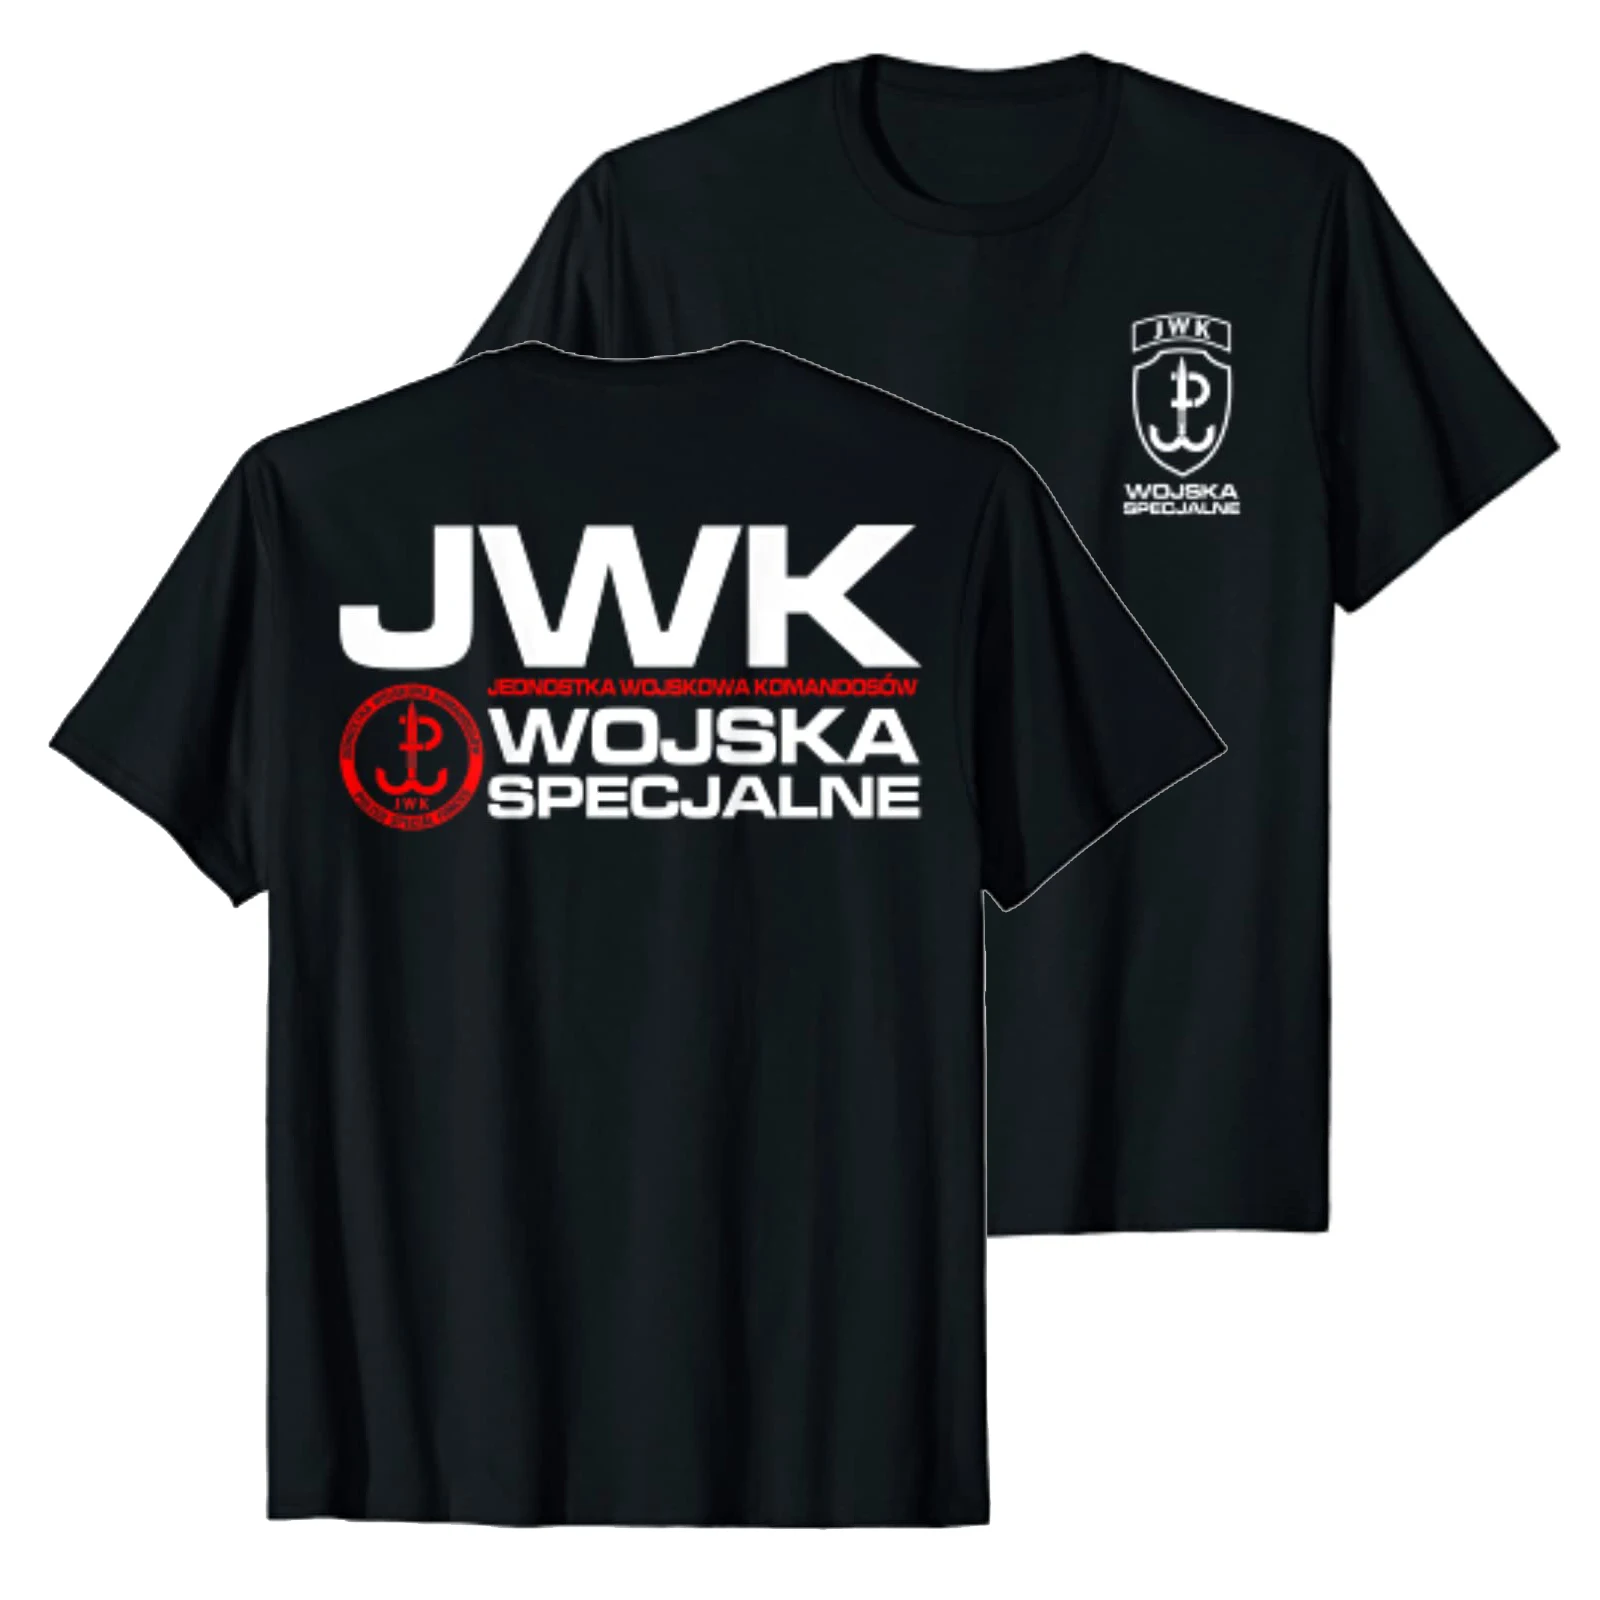 

Poland JWK Polish Commando Special Forces Group T-Shirt 100% Cotton O-Neck Summer Short Sleeve Casual Mens T-shirt Size S-3XL